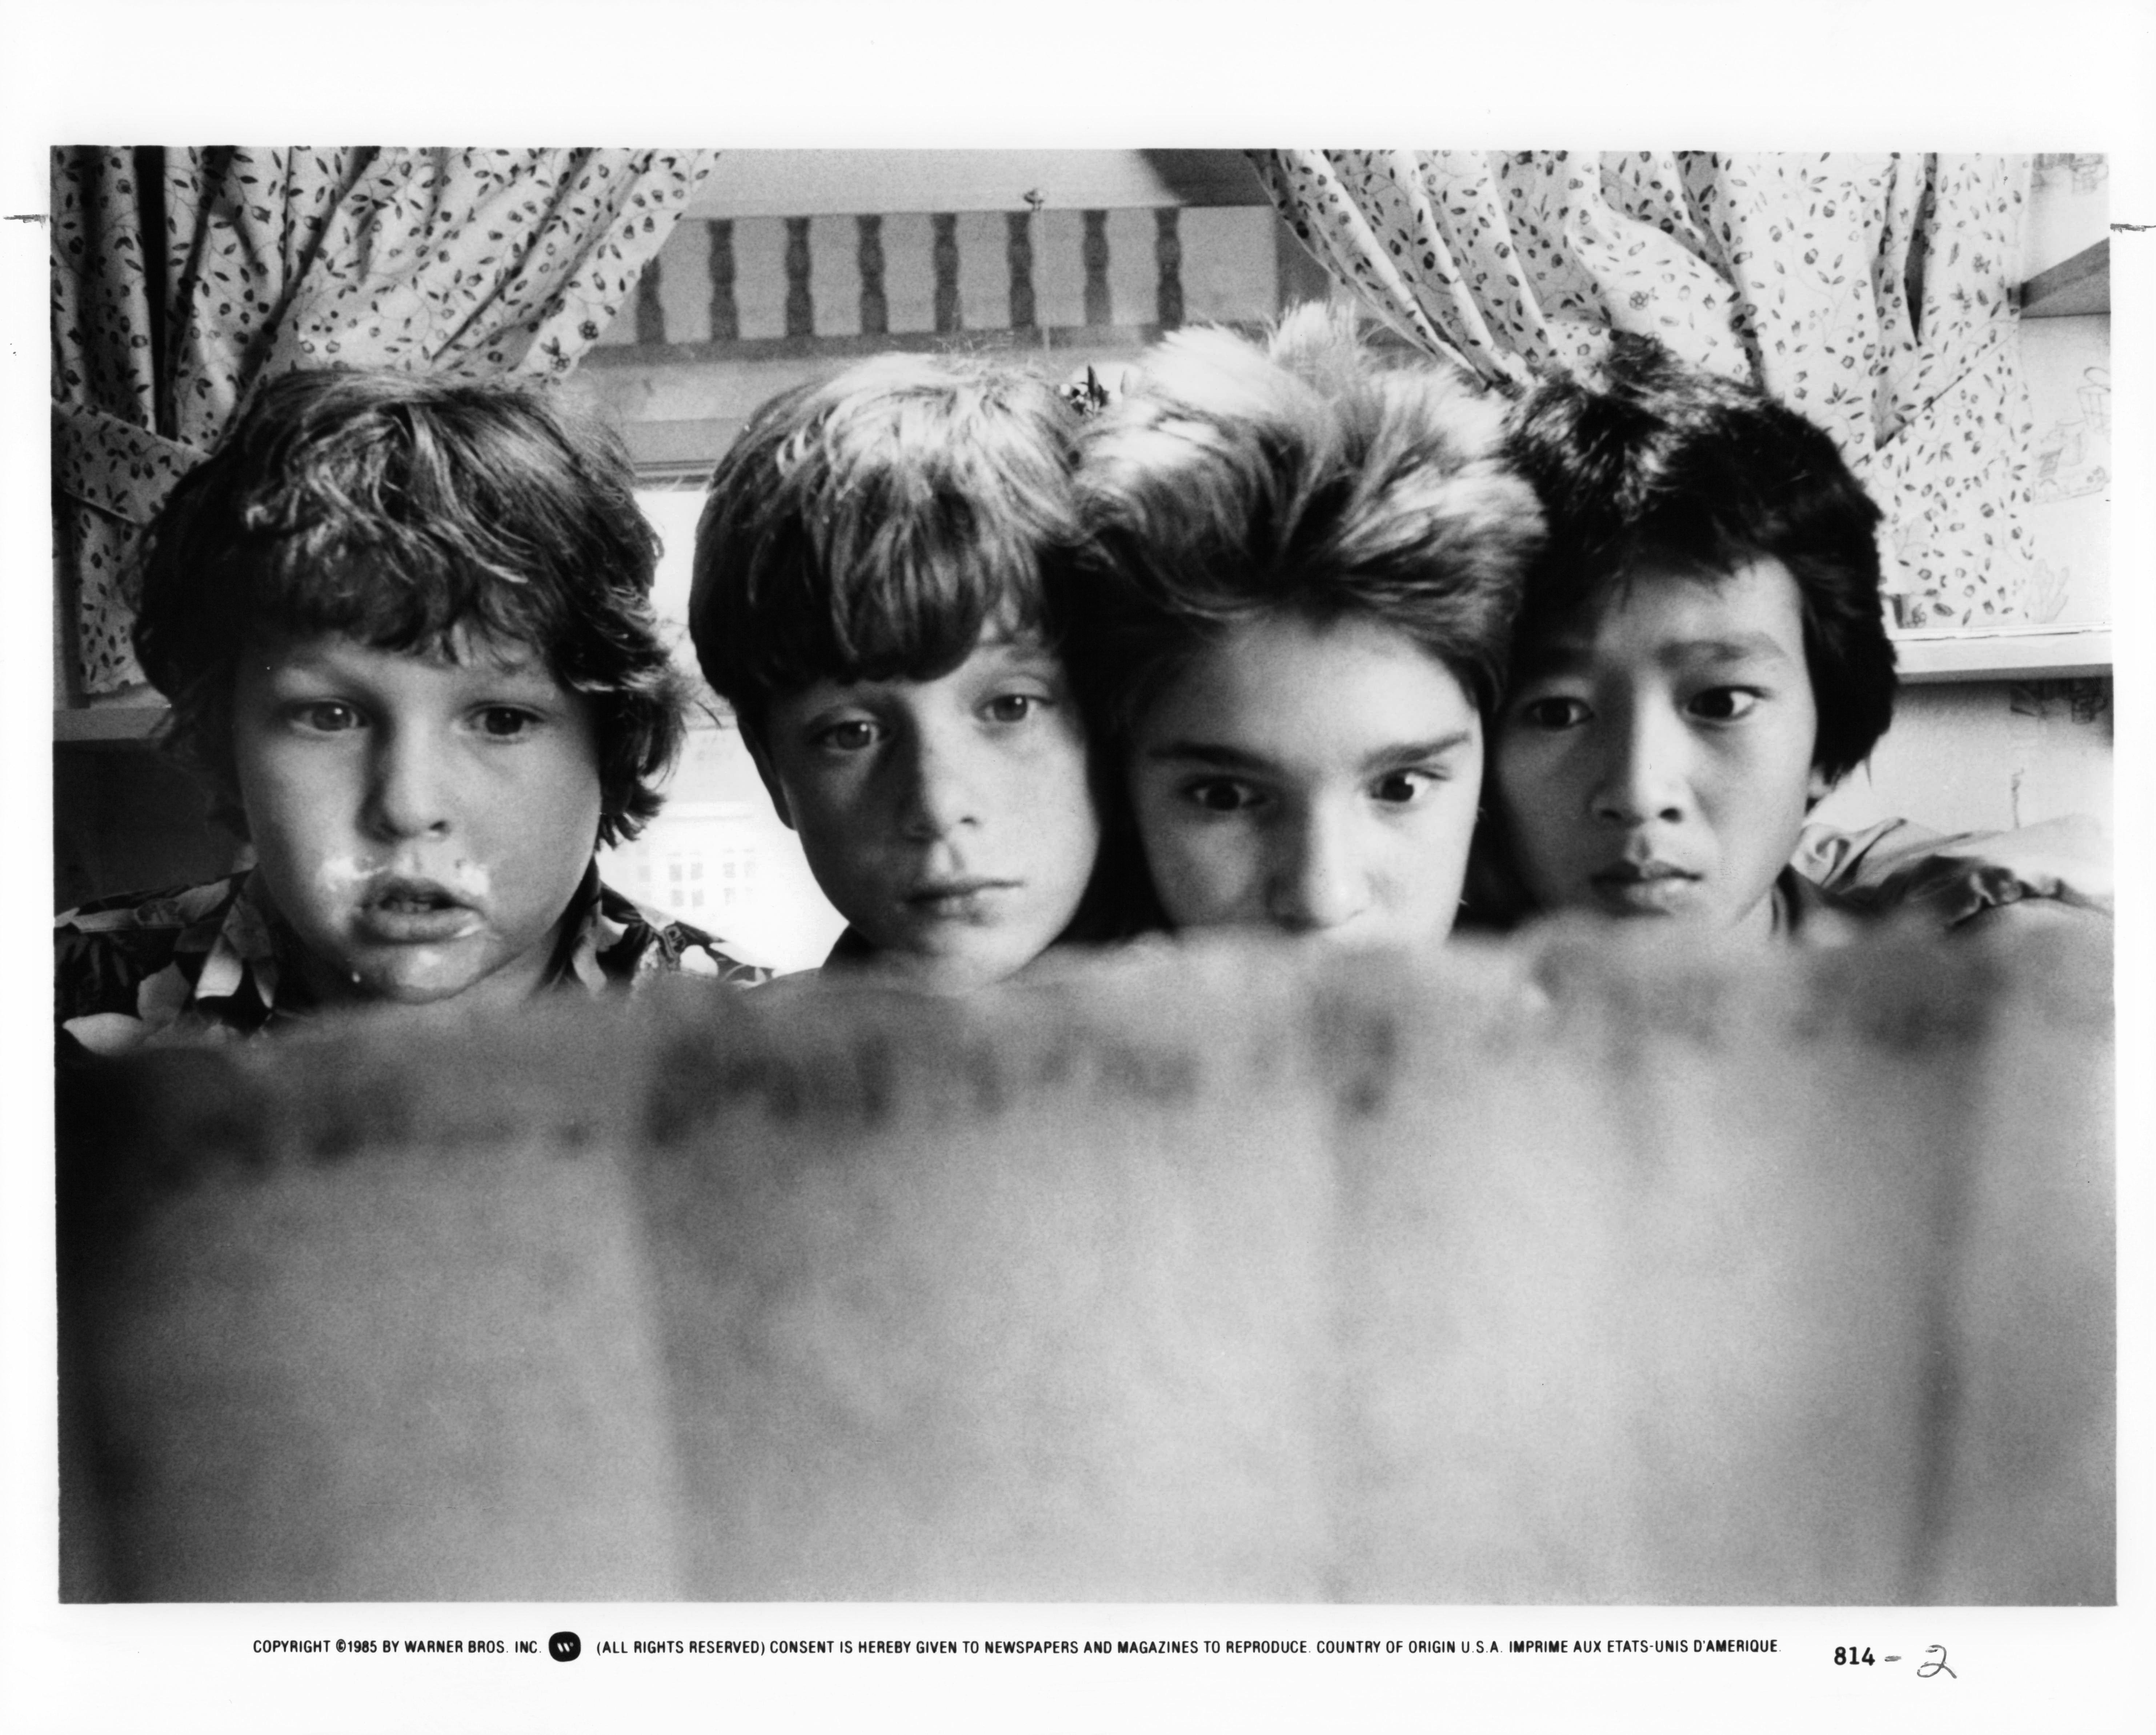 Jeff Cohen, Sean Astin, Corey Feldman and Ke Huy Quan in "The Goonies," 1985 | Source: Getty Images